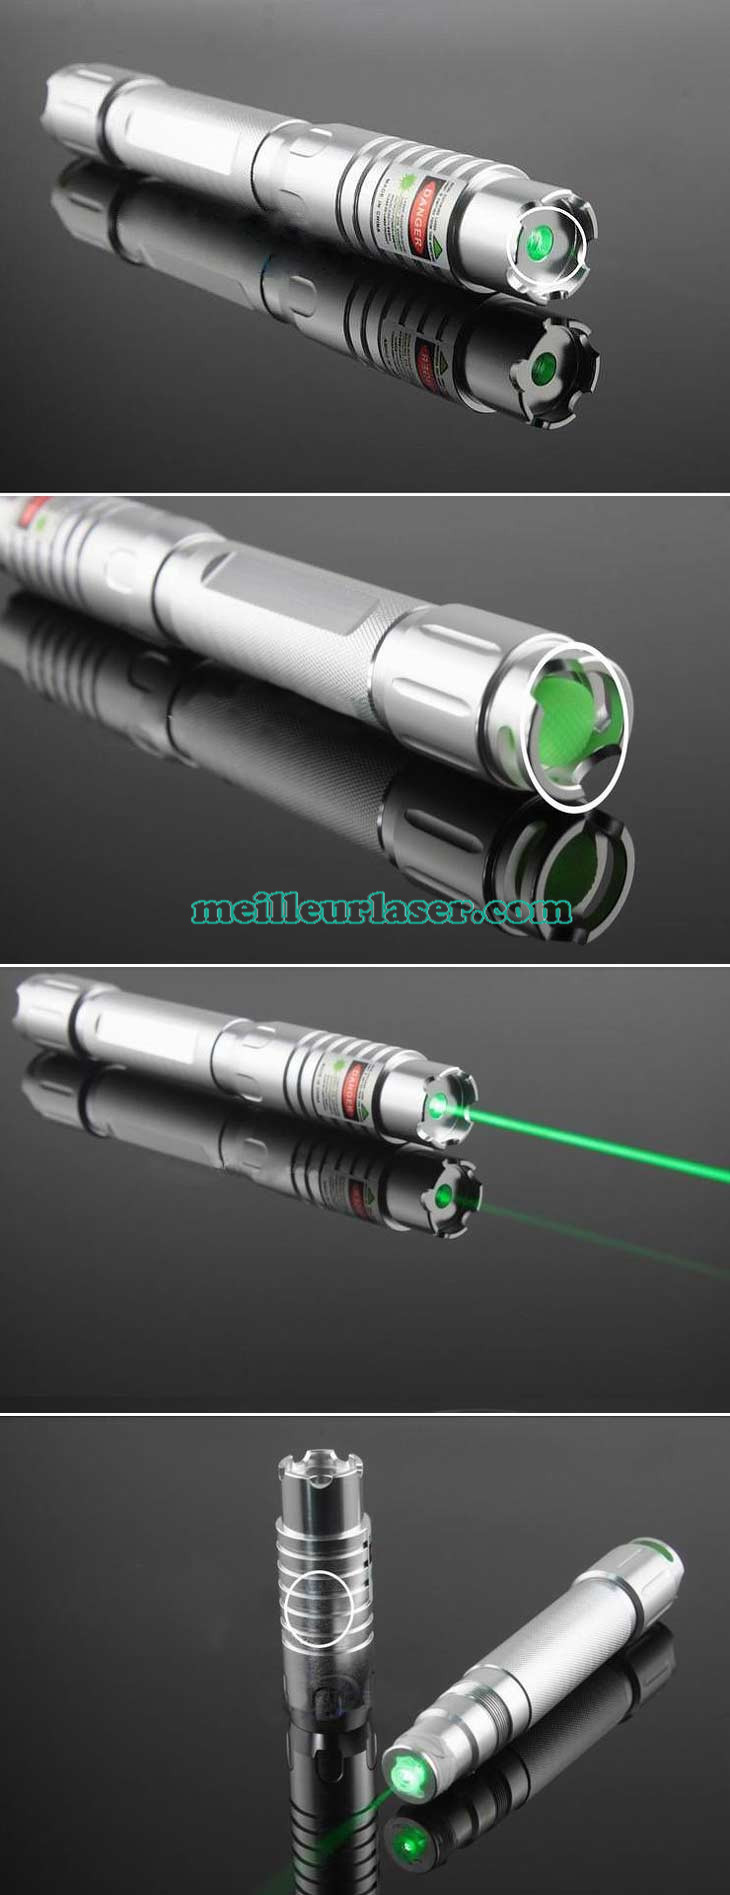 laser 5000mW pas cher